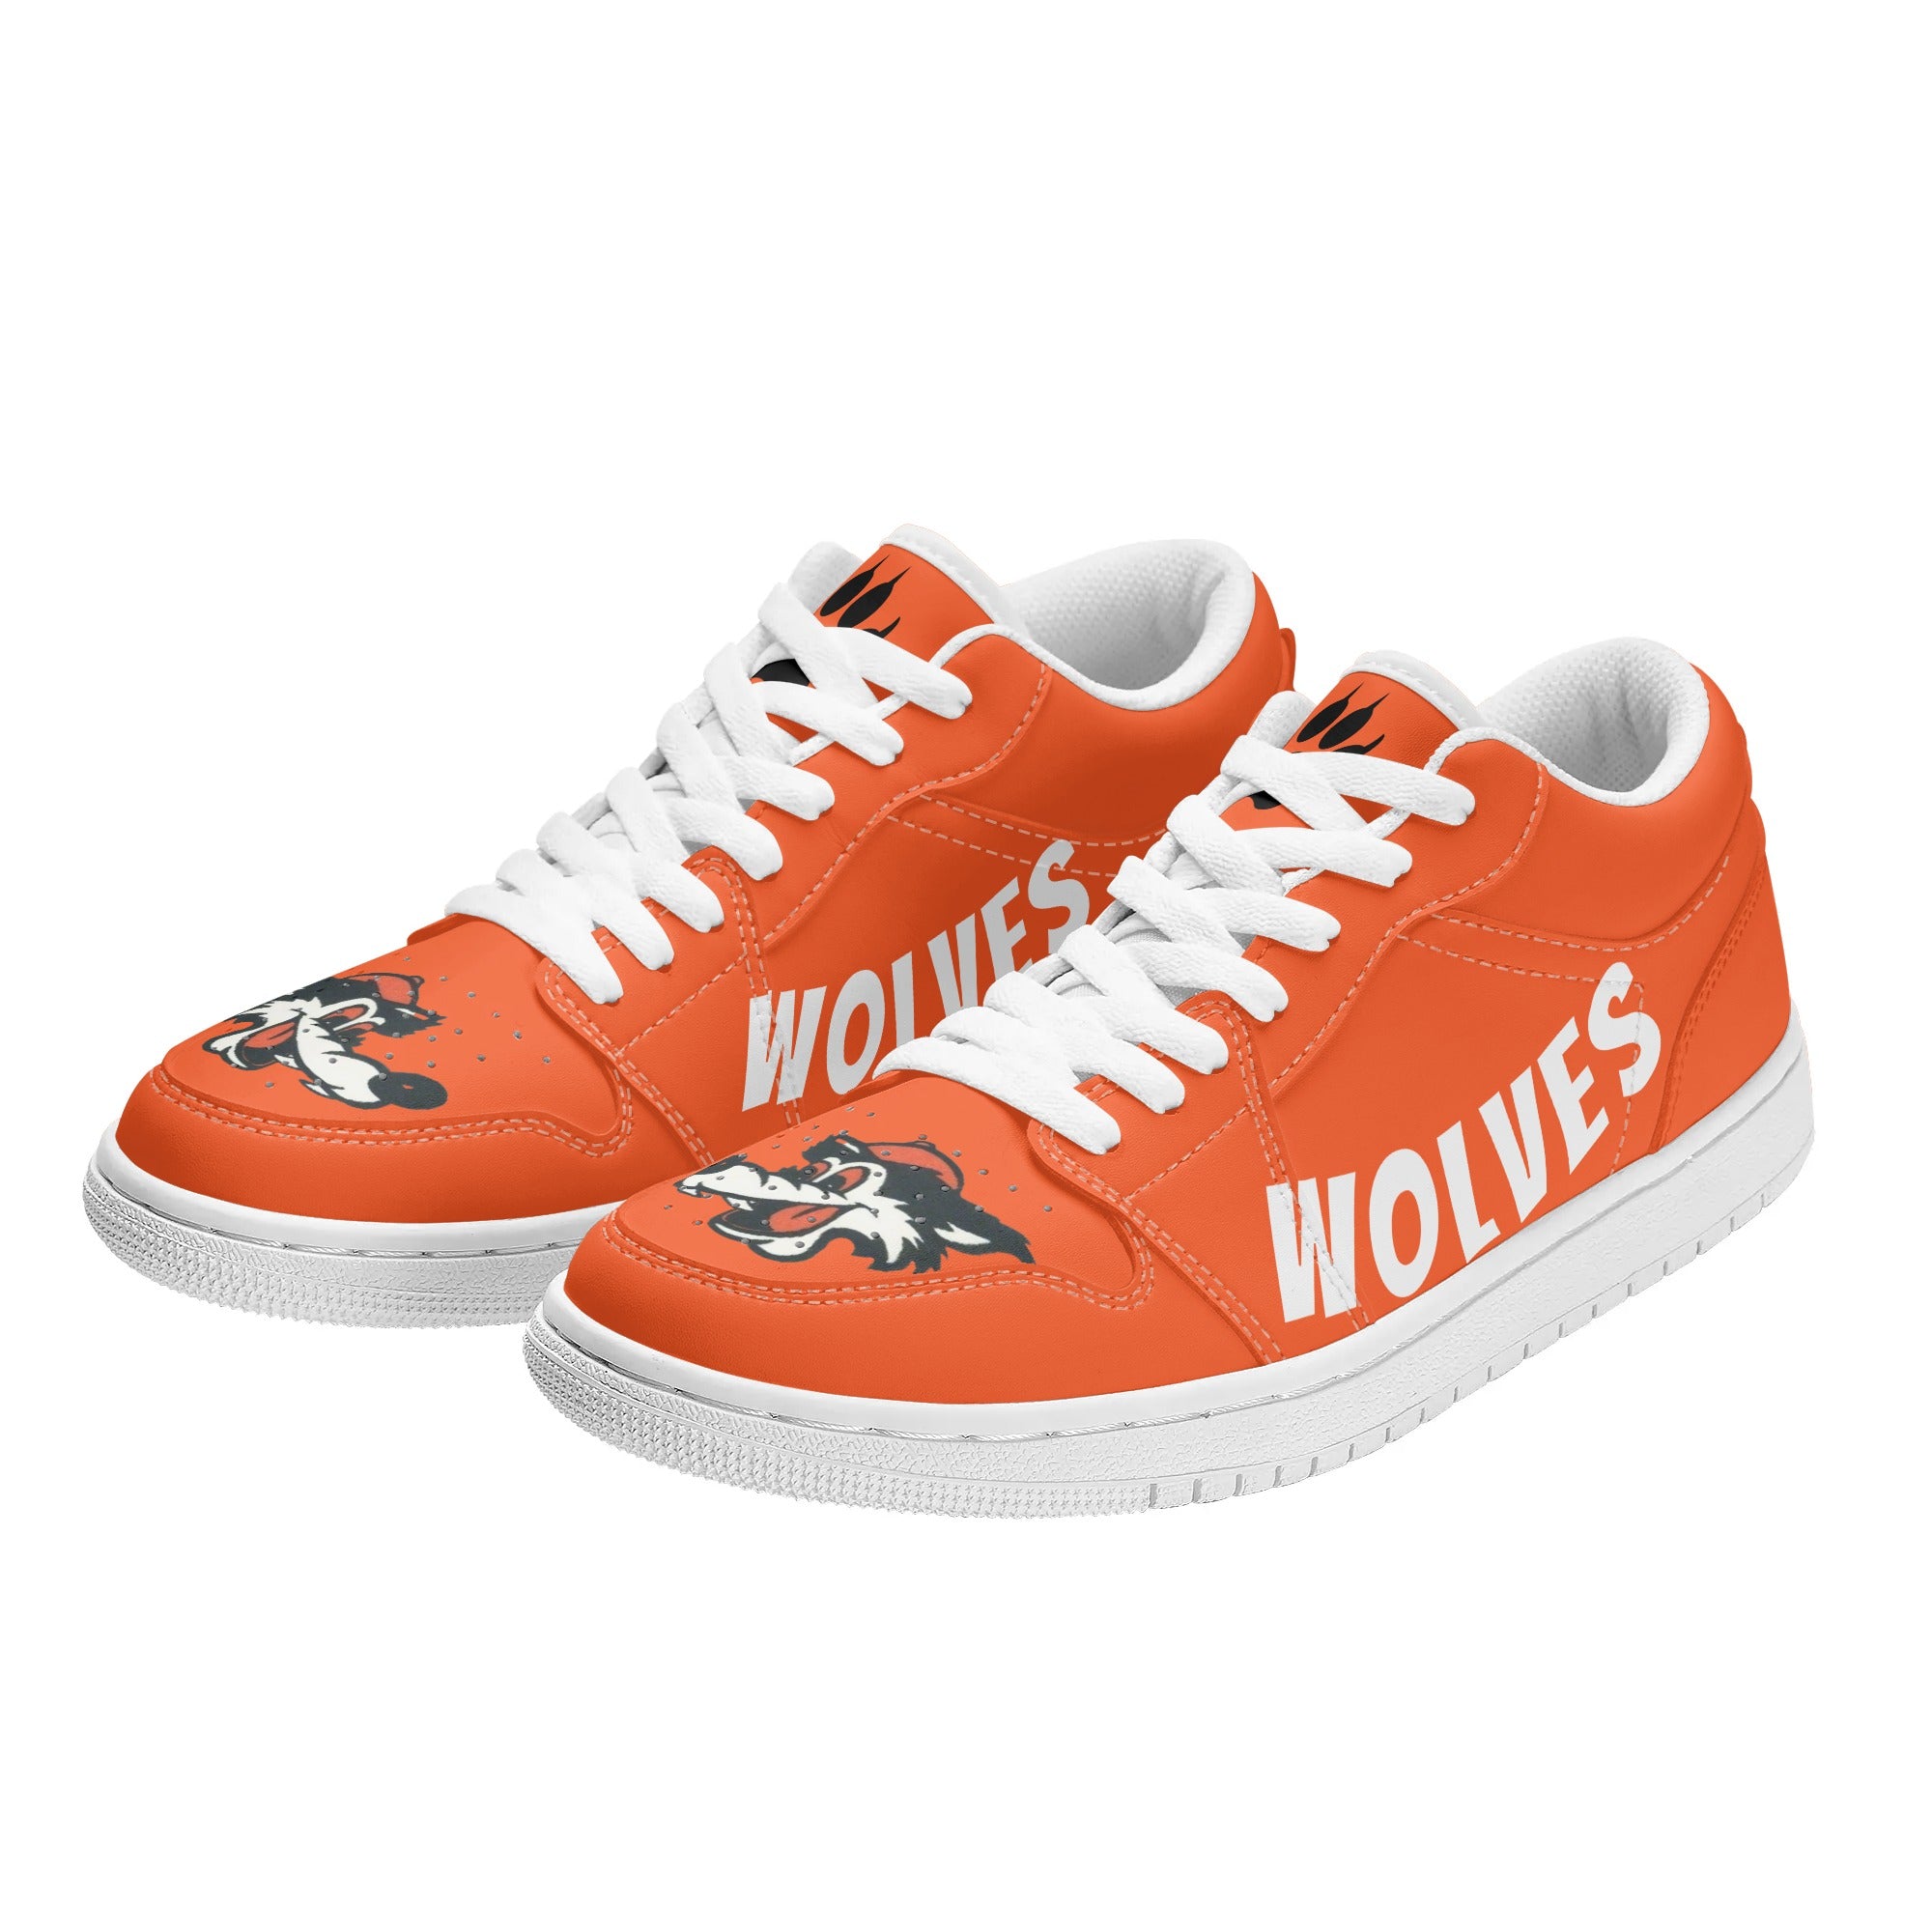 Wolves | Customized Sneakers | Shoe Zero